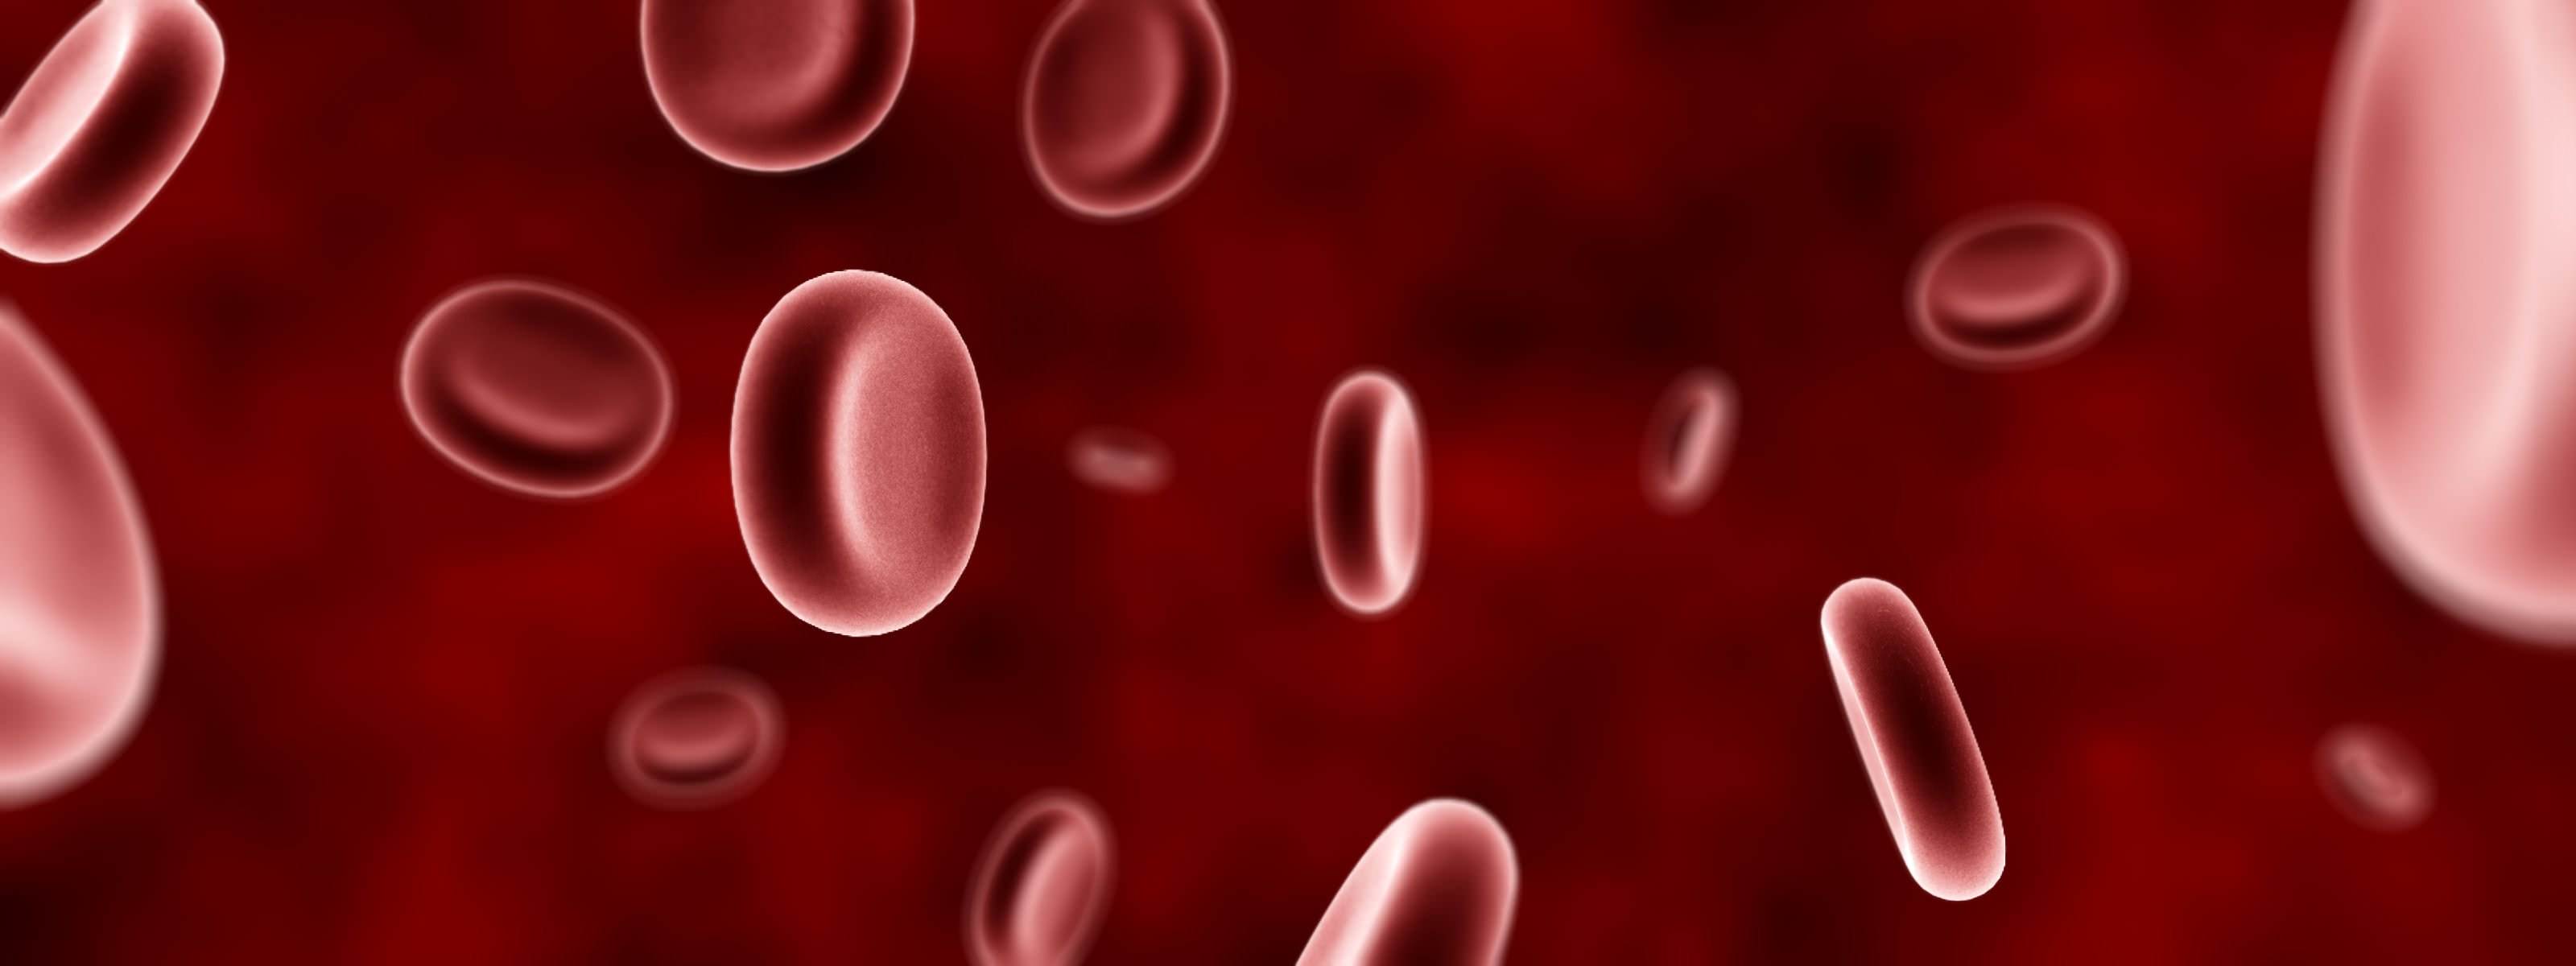 Art Digital Dual Blood Cells